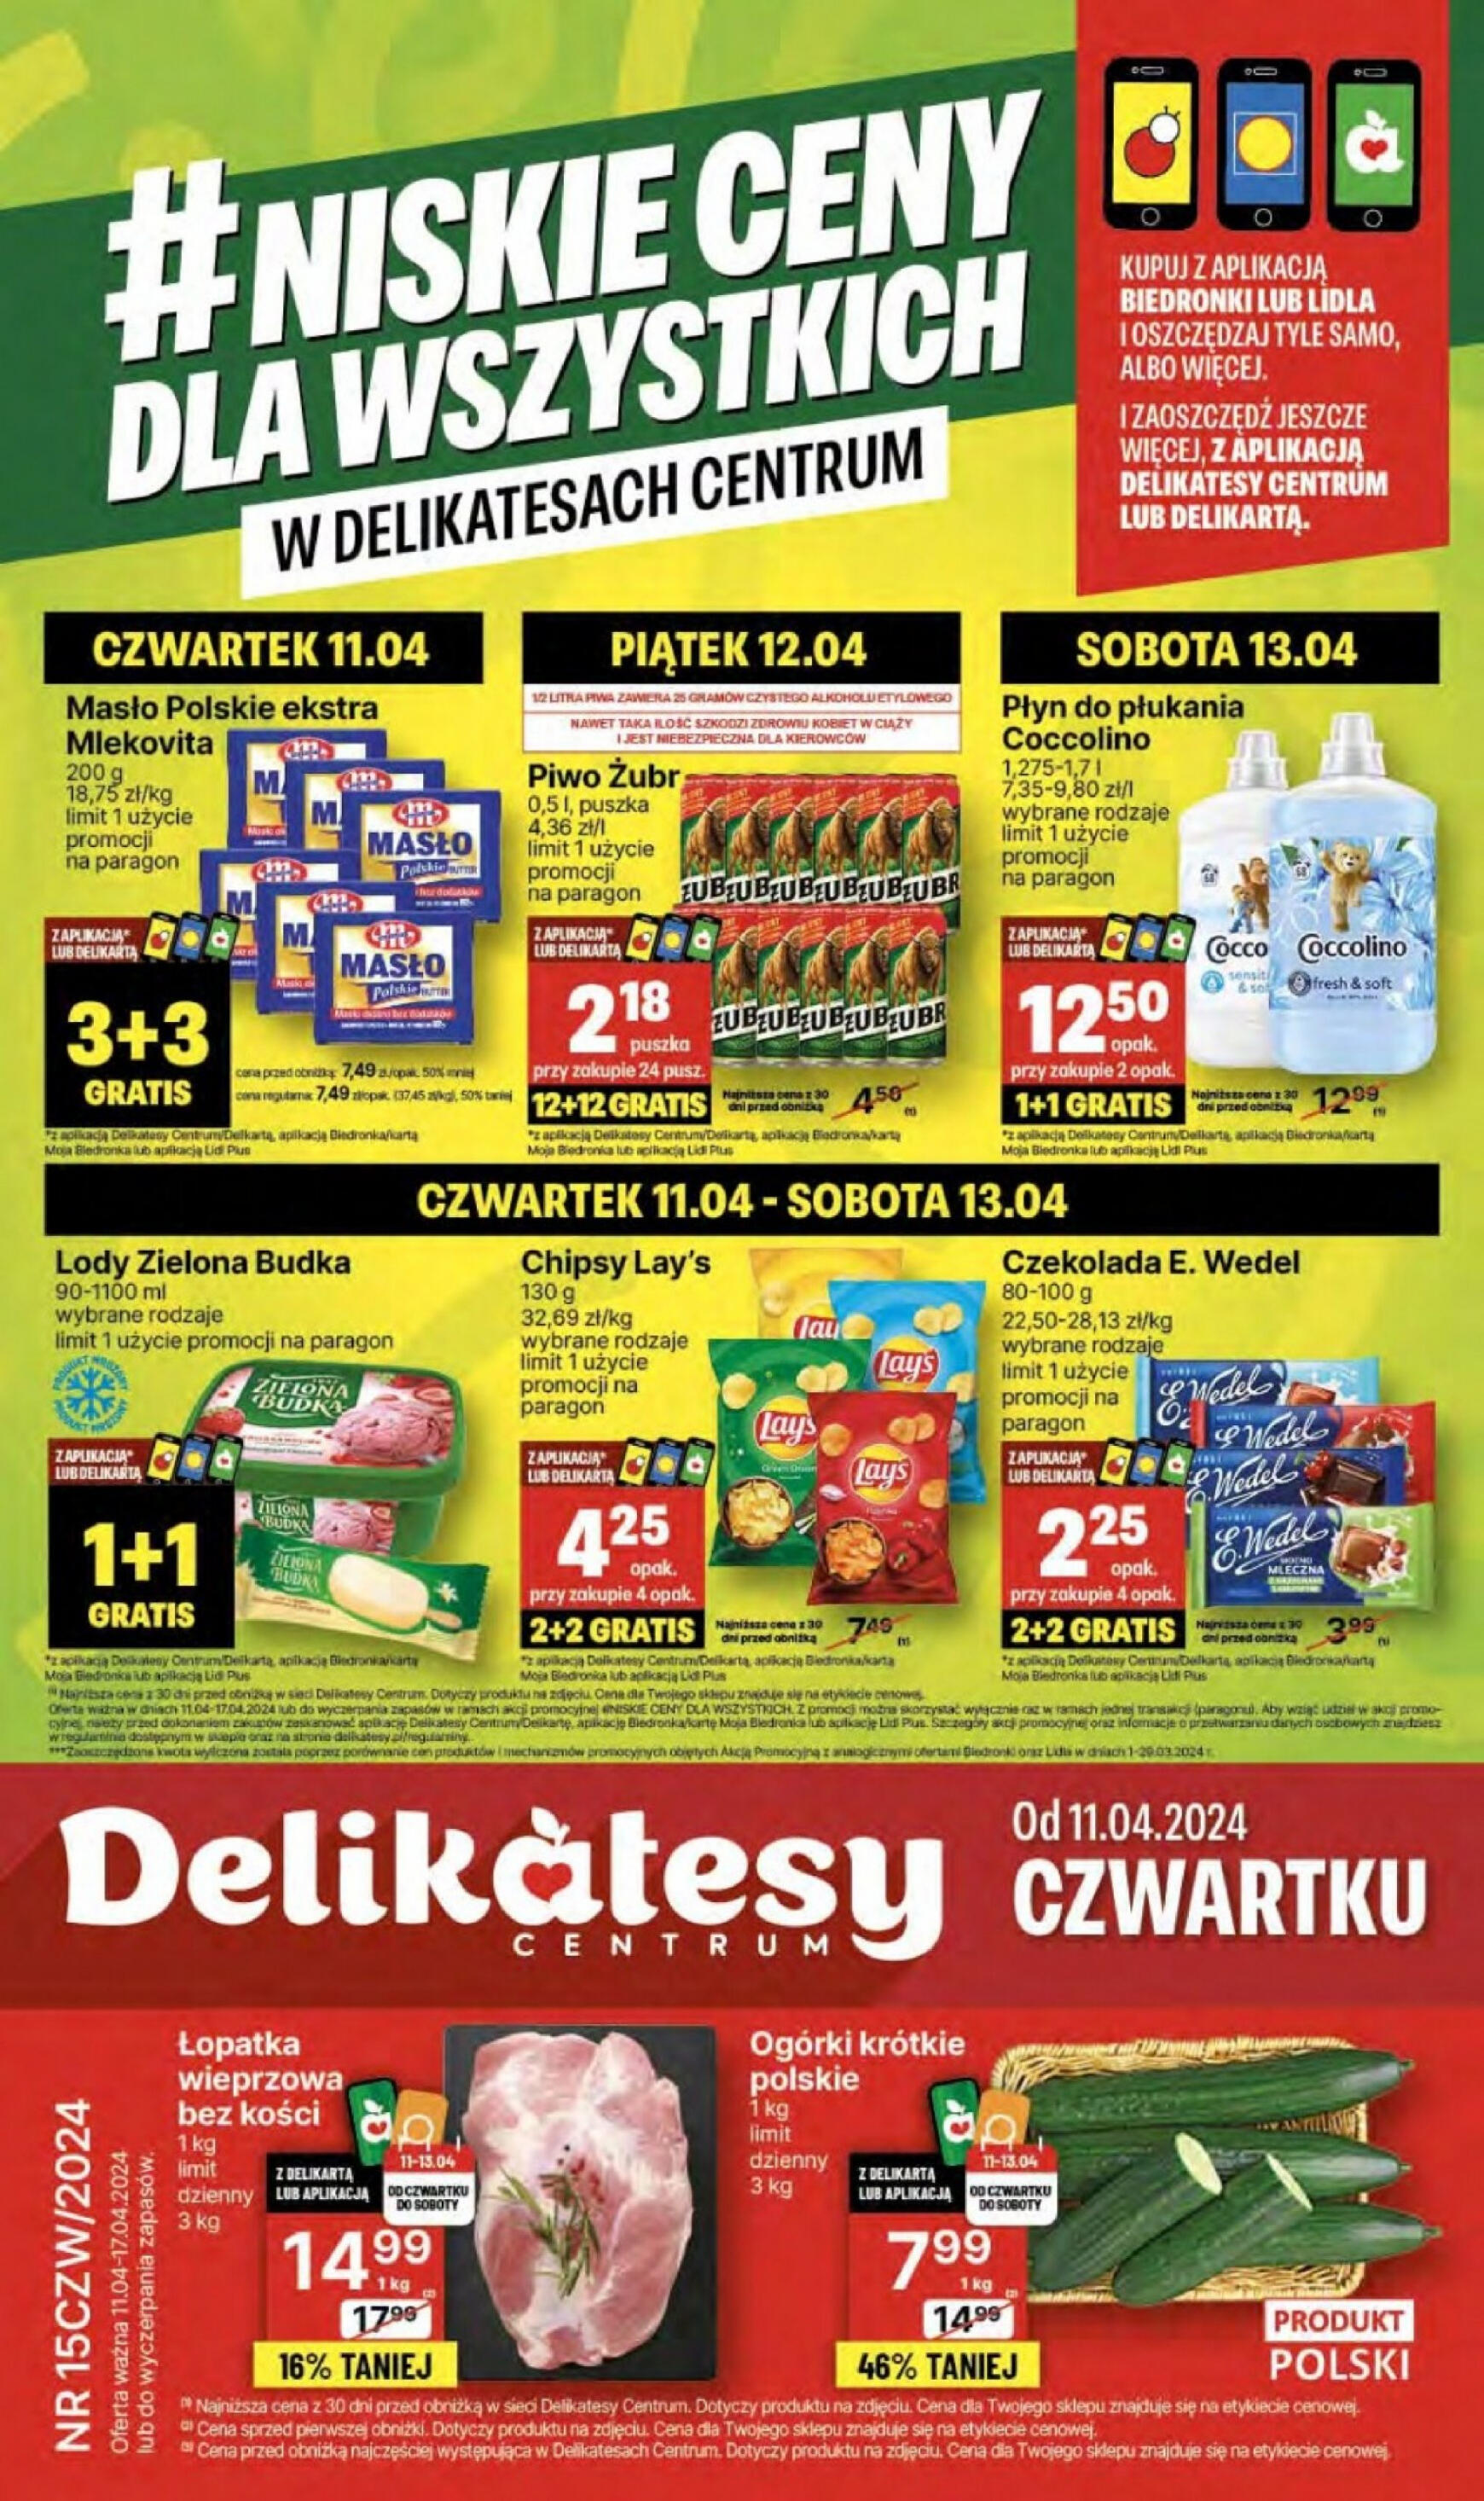 delikatesy-centrum - Delikatesy Centrum gazetka aktualna ważna od 11.04. - 17.04.